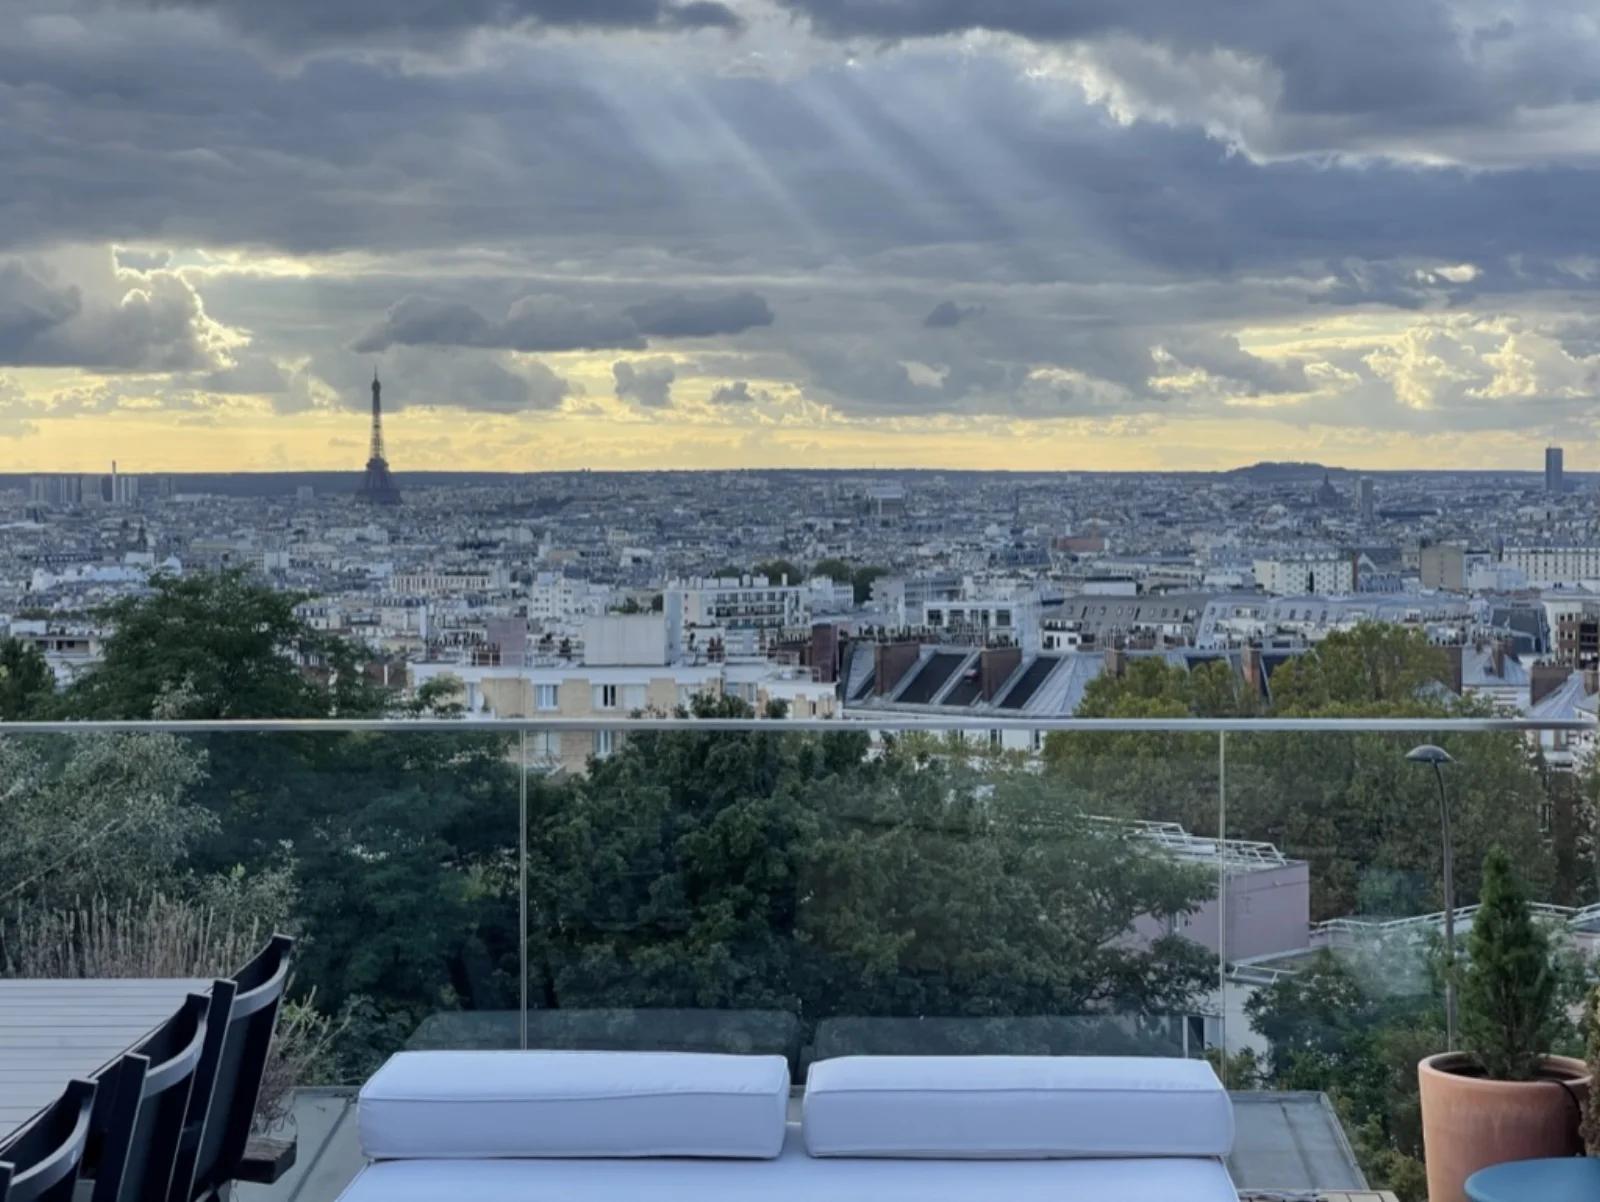 Azotea parisina con impresionantes vistas